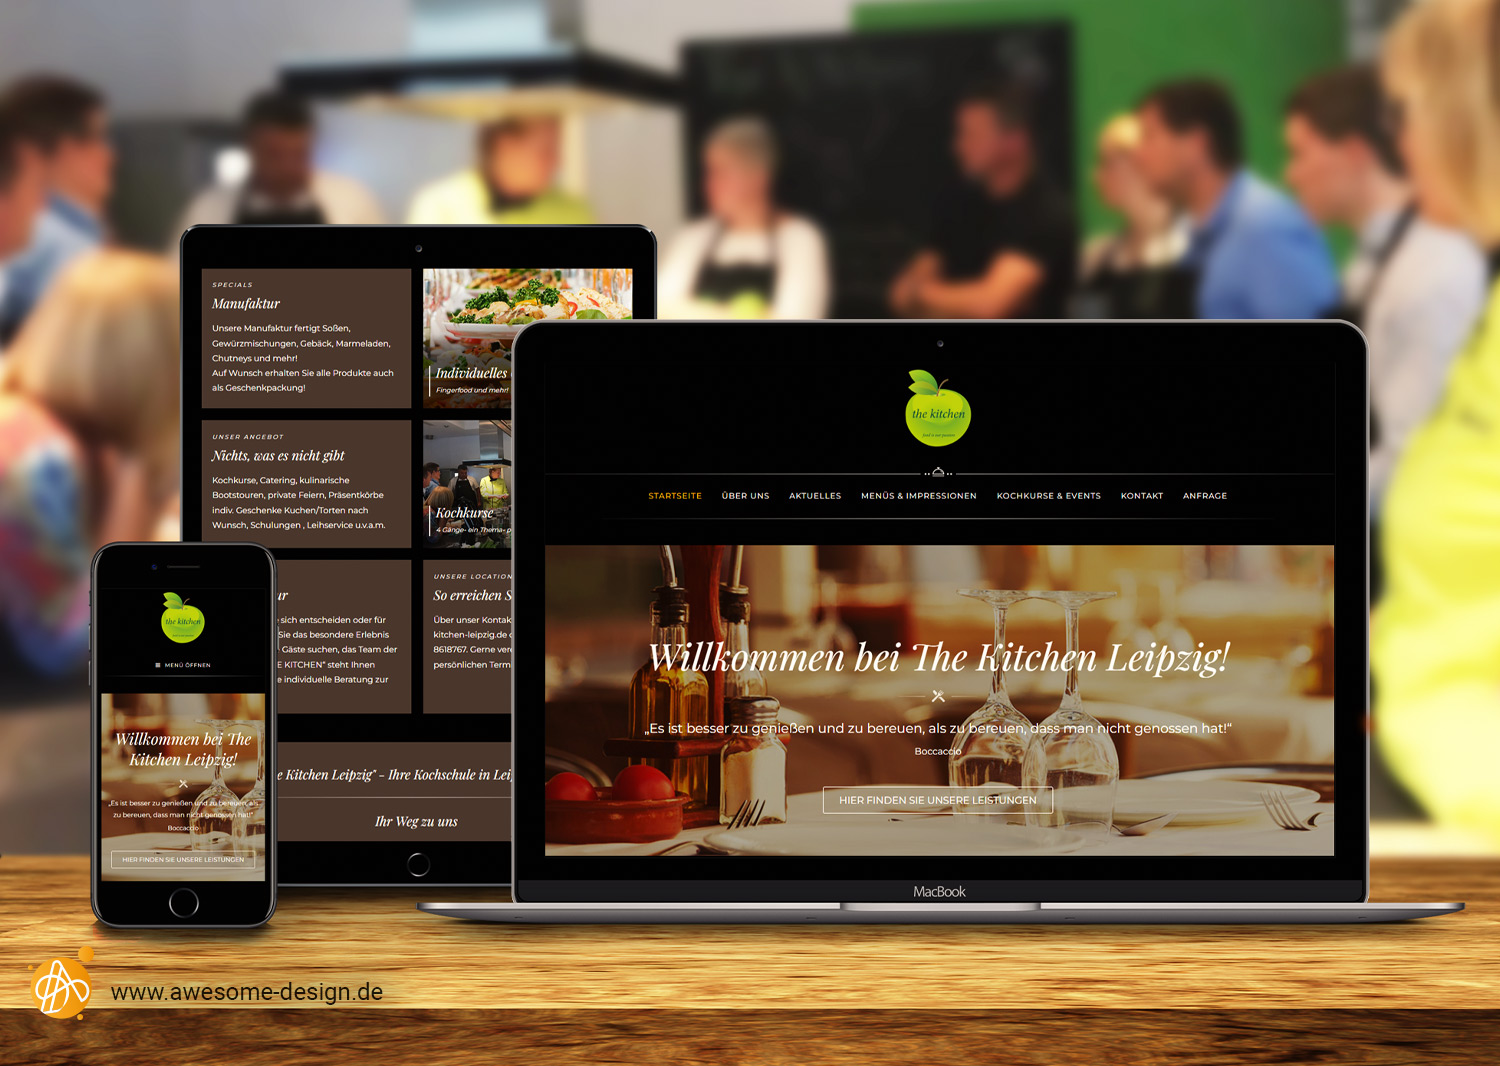 Webdesign - The Kitchen Leipzig | Awesome Design